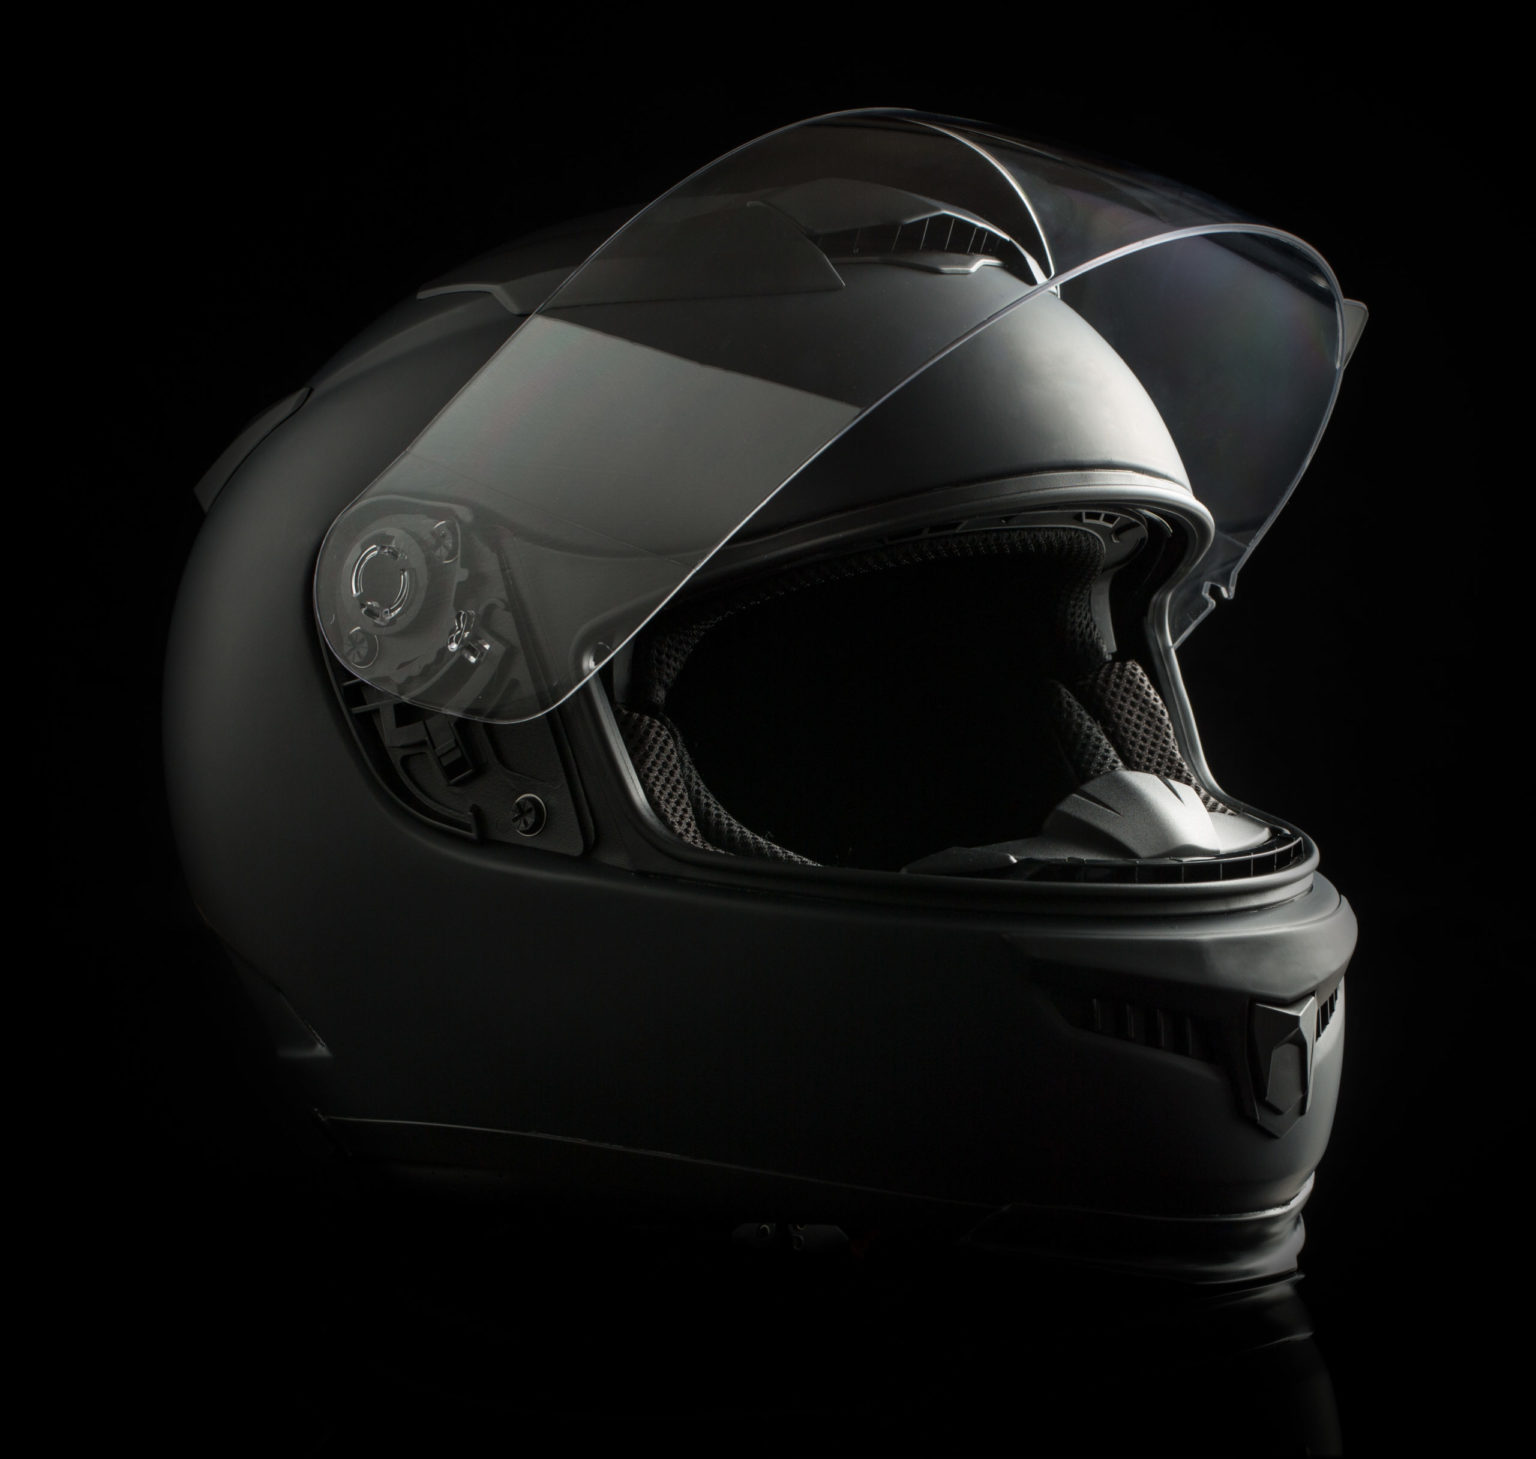 a black and white helmet